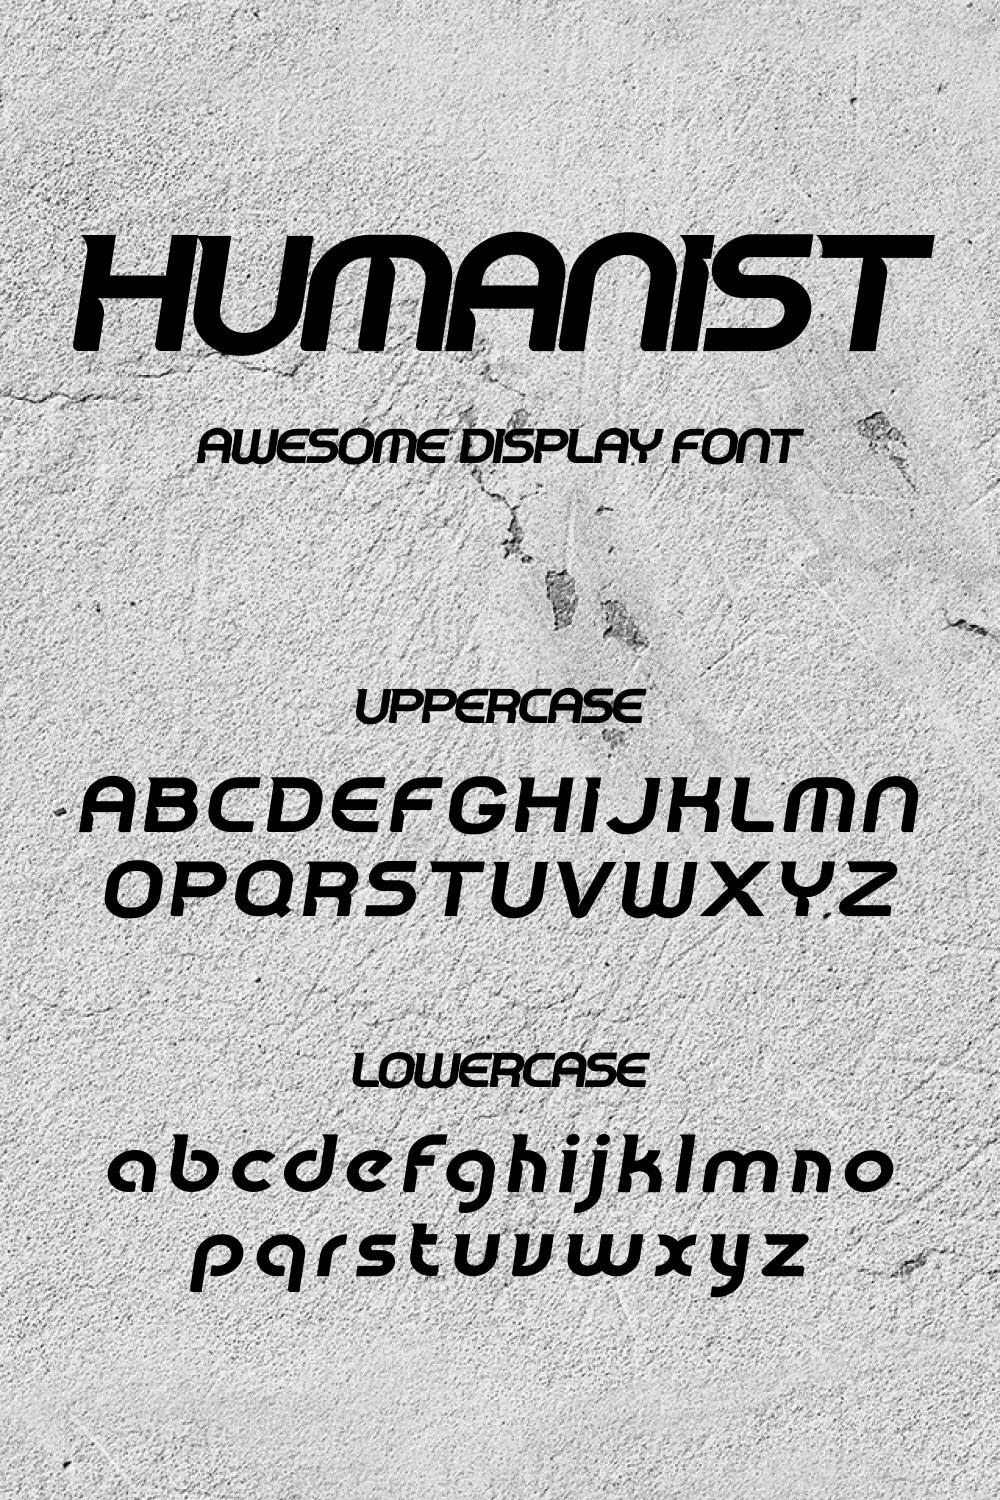 Humanist font of pinterest.